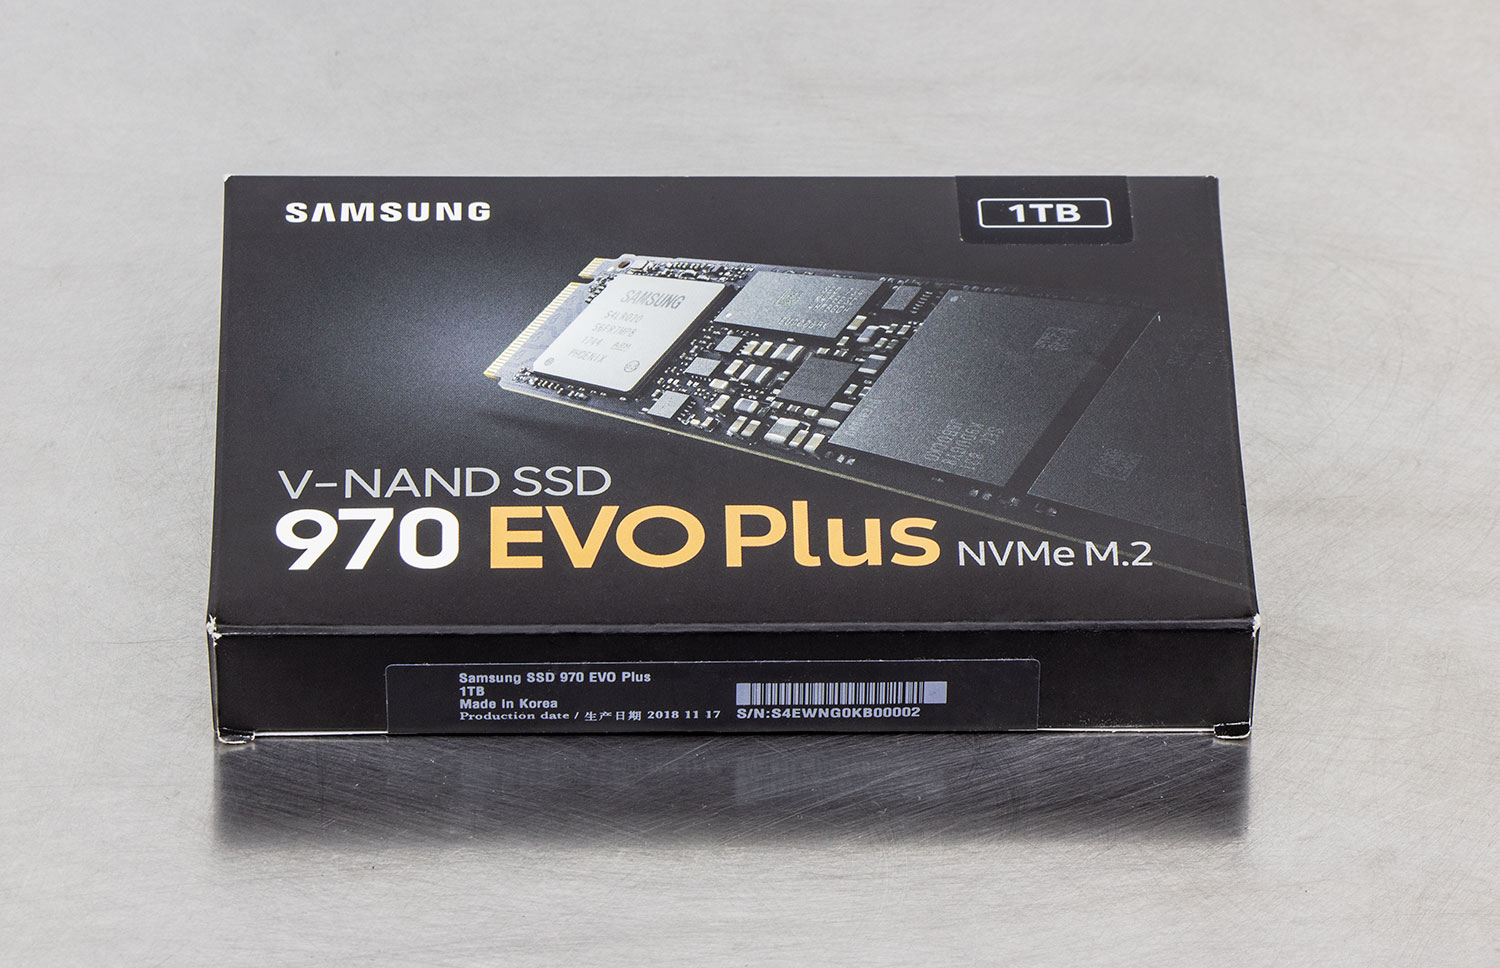 Ssd samsung 970 evo plus купить. SSD Samsung 970 EVO Plus. SSD Samsung 970 EVO Plus упаковка. Samsung 970 EVO Plus 250gb. Коробка Samsung 970 EVO Plus.